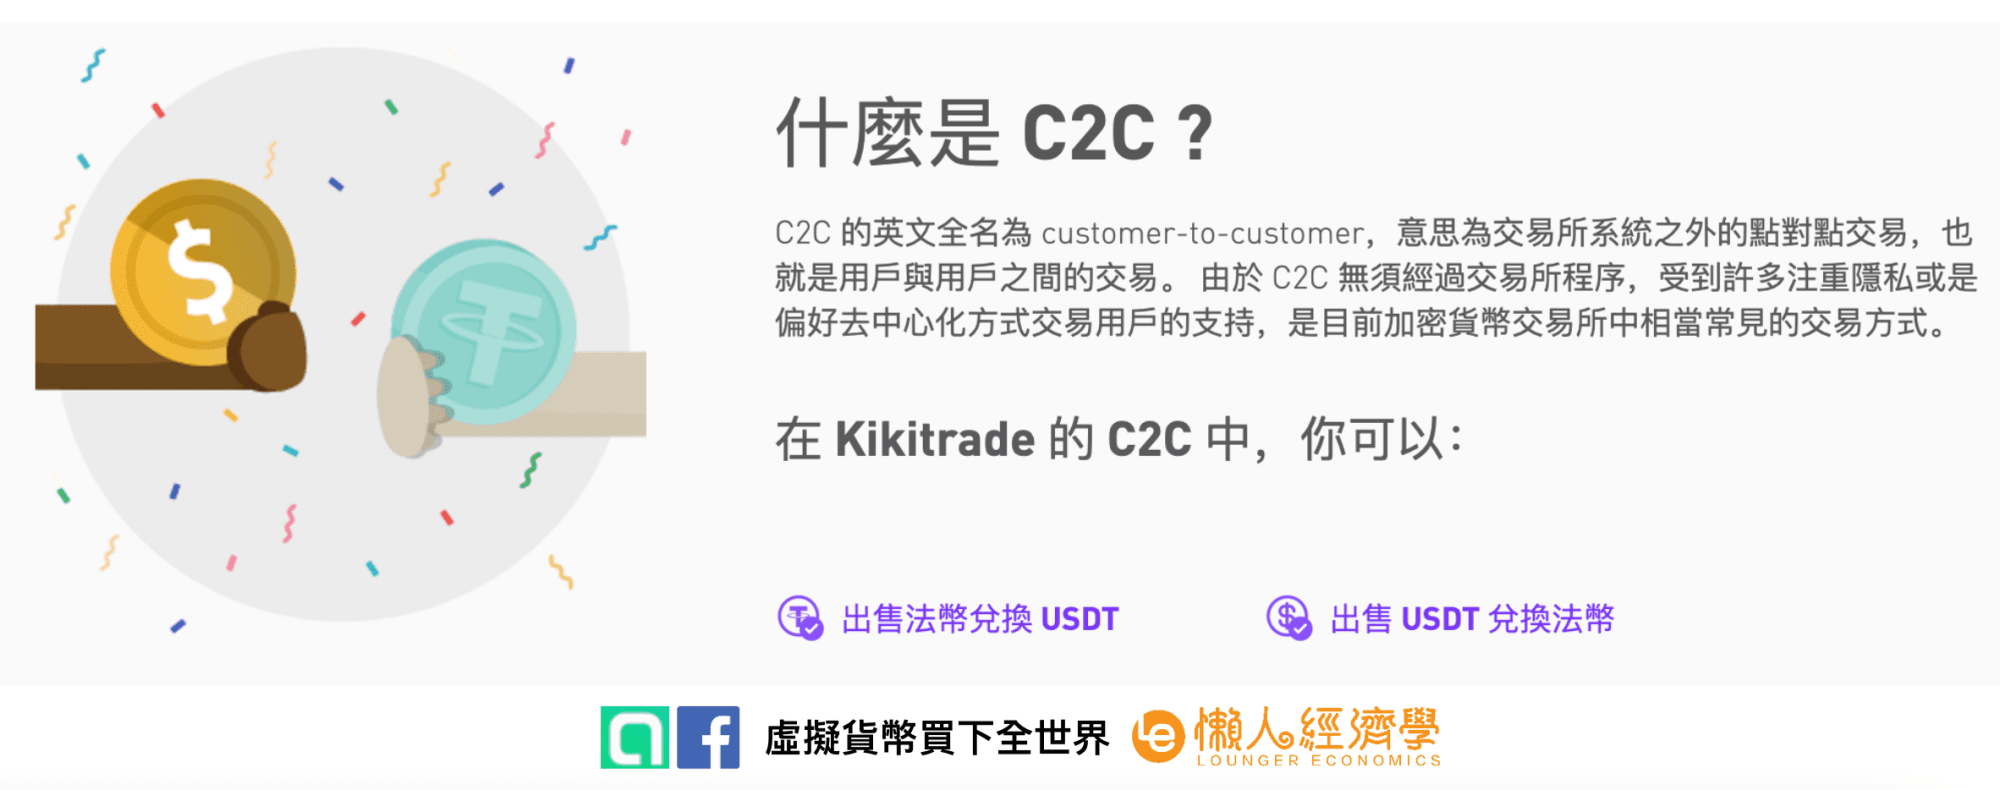 Kikitrade C2C 出入金介紹